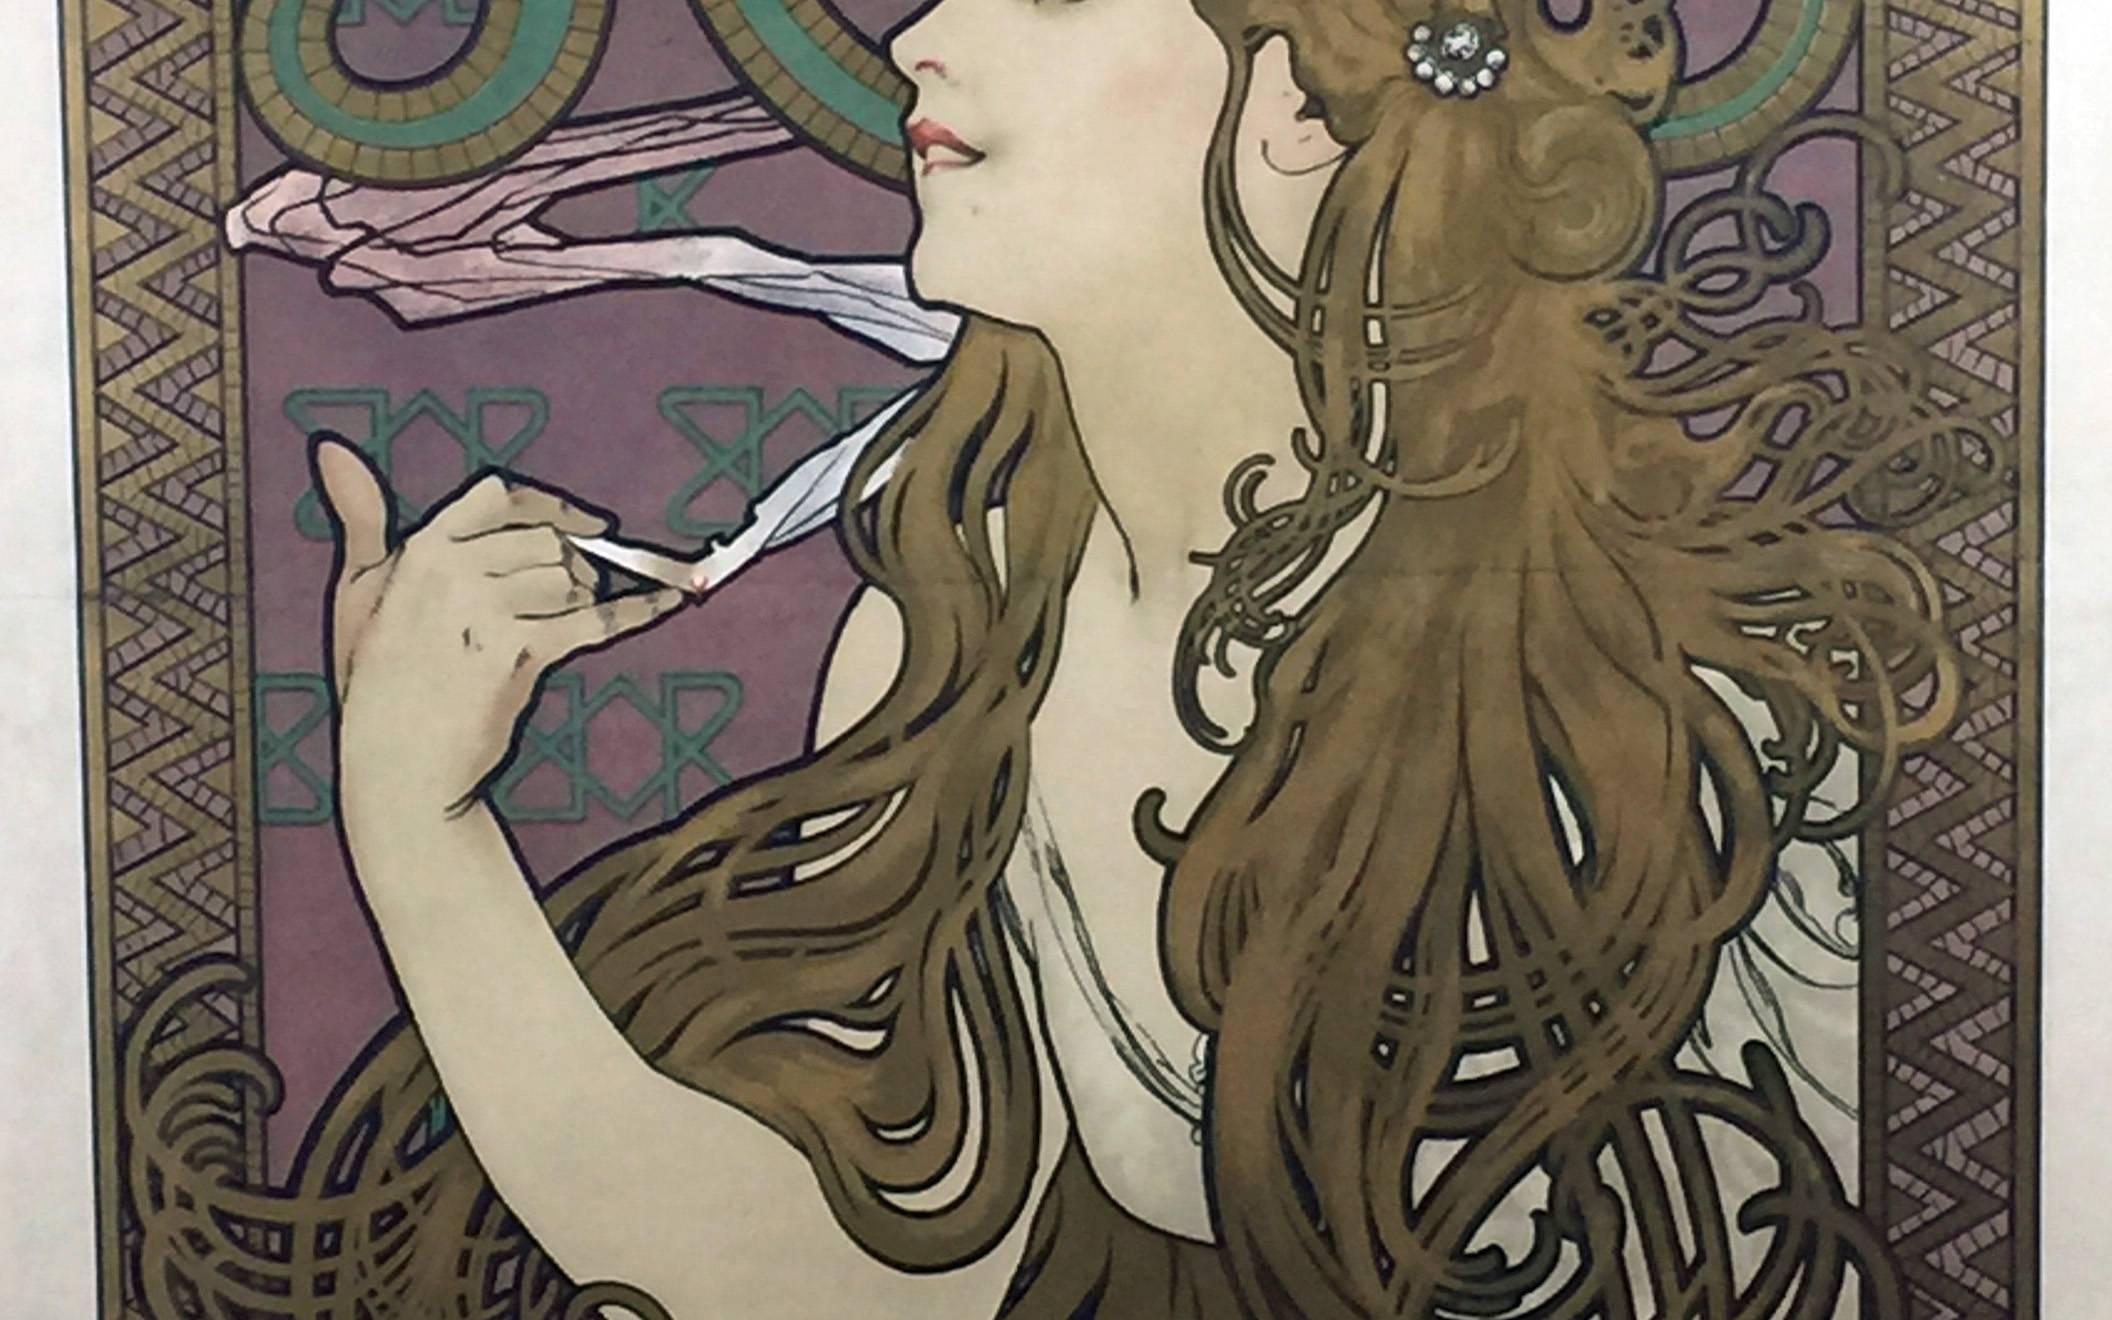 JOB - Art Nouveau Print by Alphonse Mucha